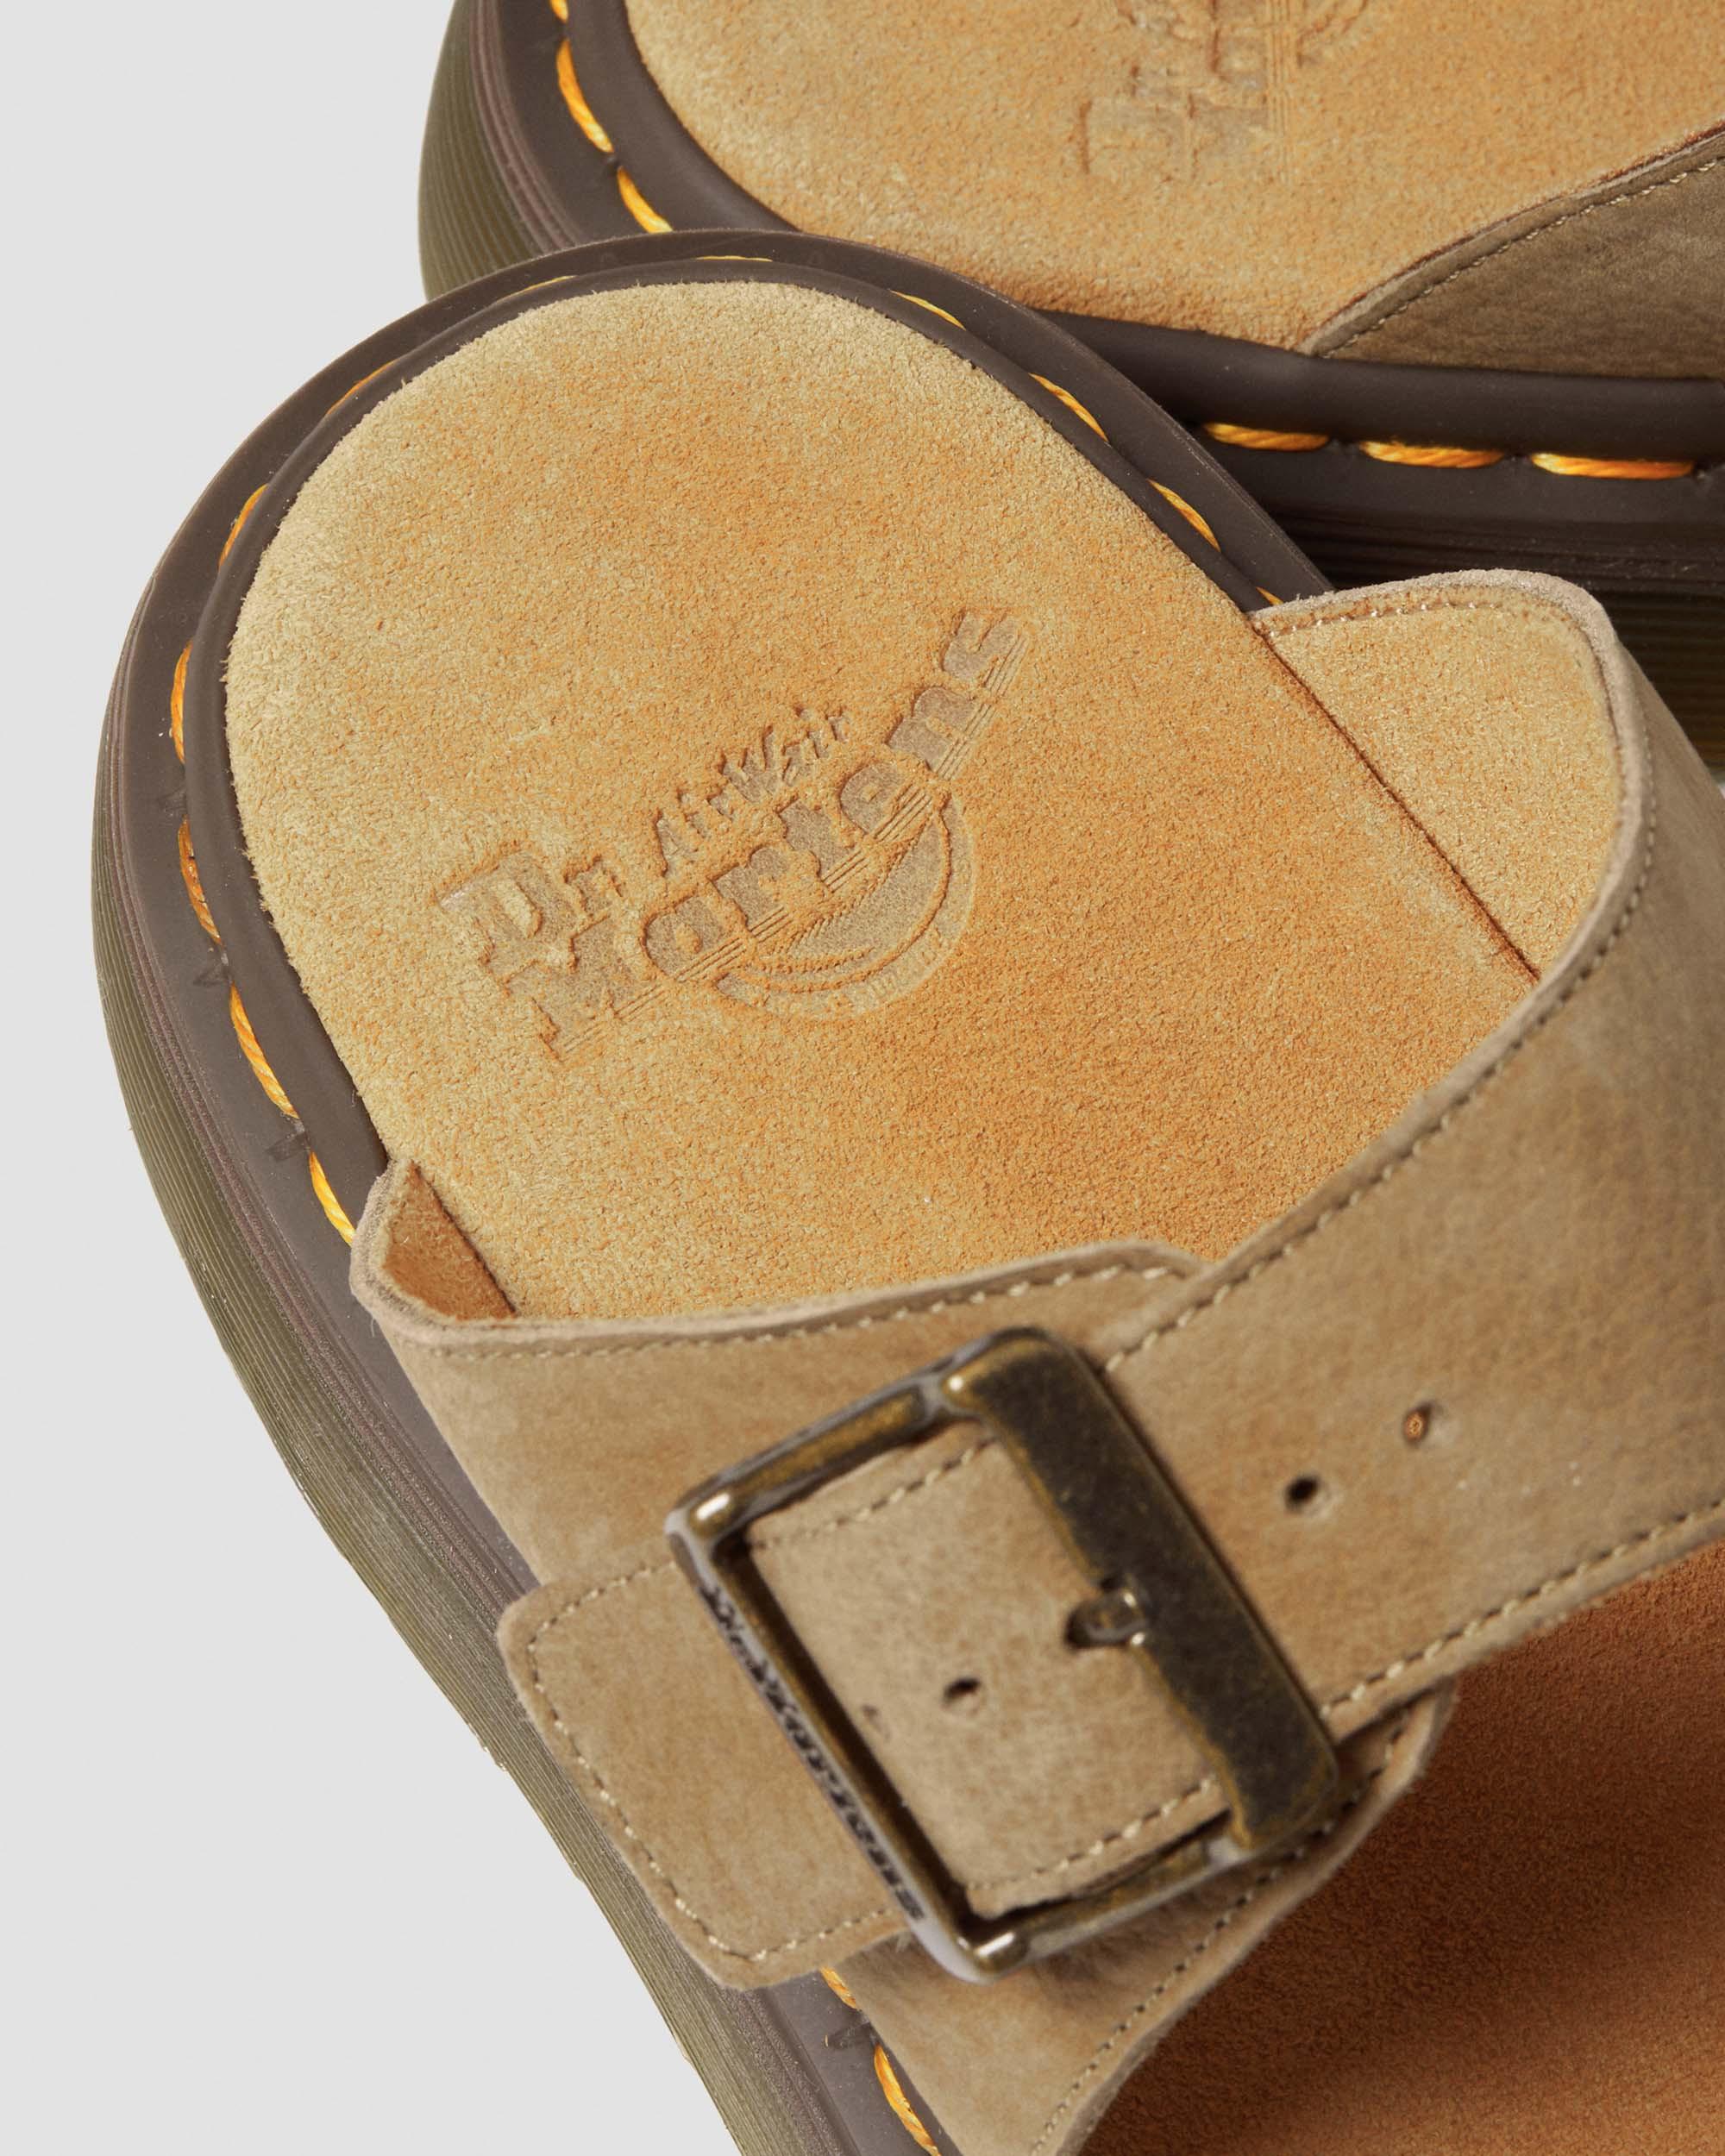 Josef Nubuck Leather Buckle Slide Sandals in Savannah Tan